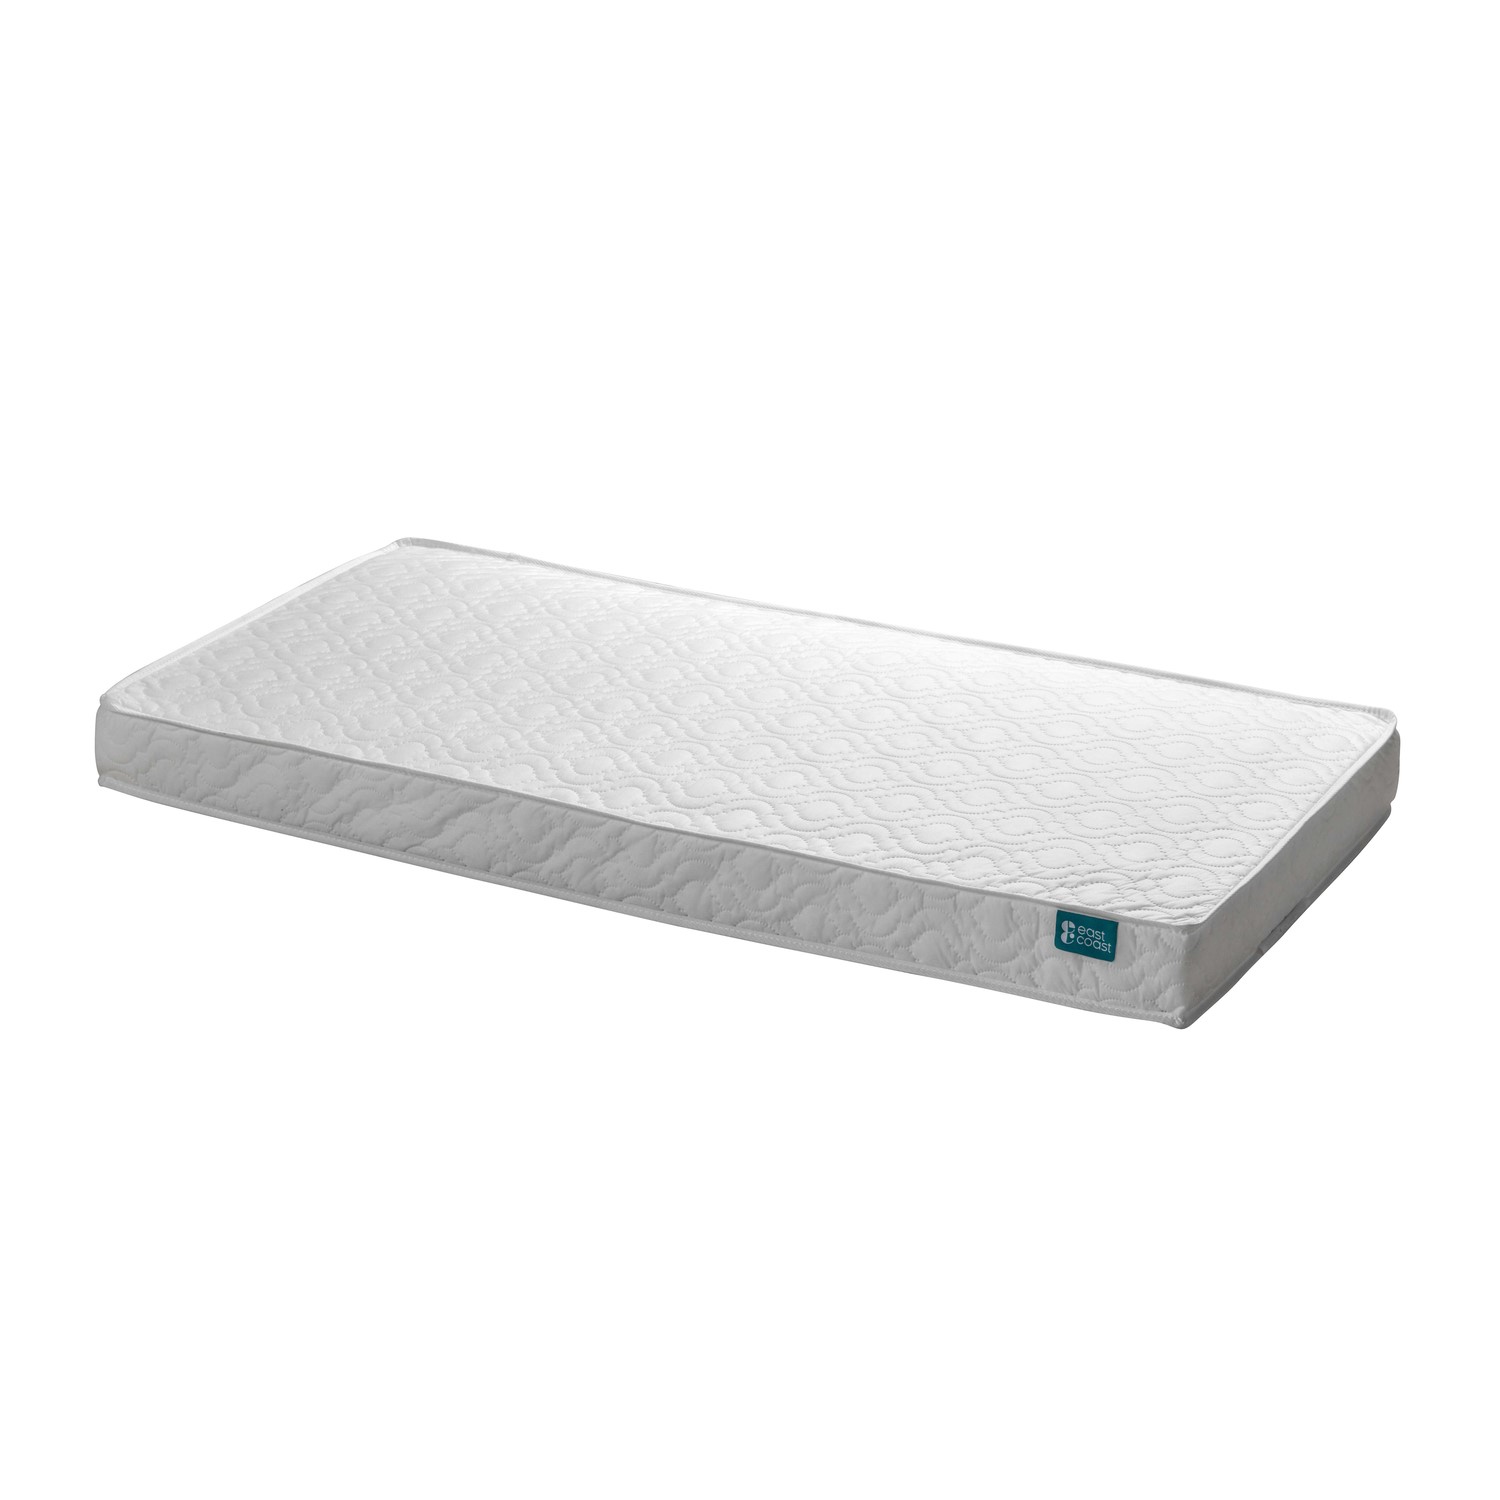 Cot bed spring mattress - 140cm x 70cm - east coast